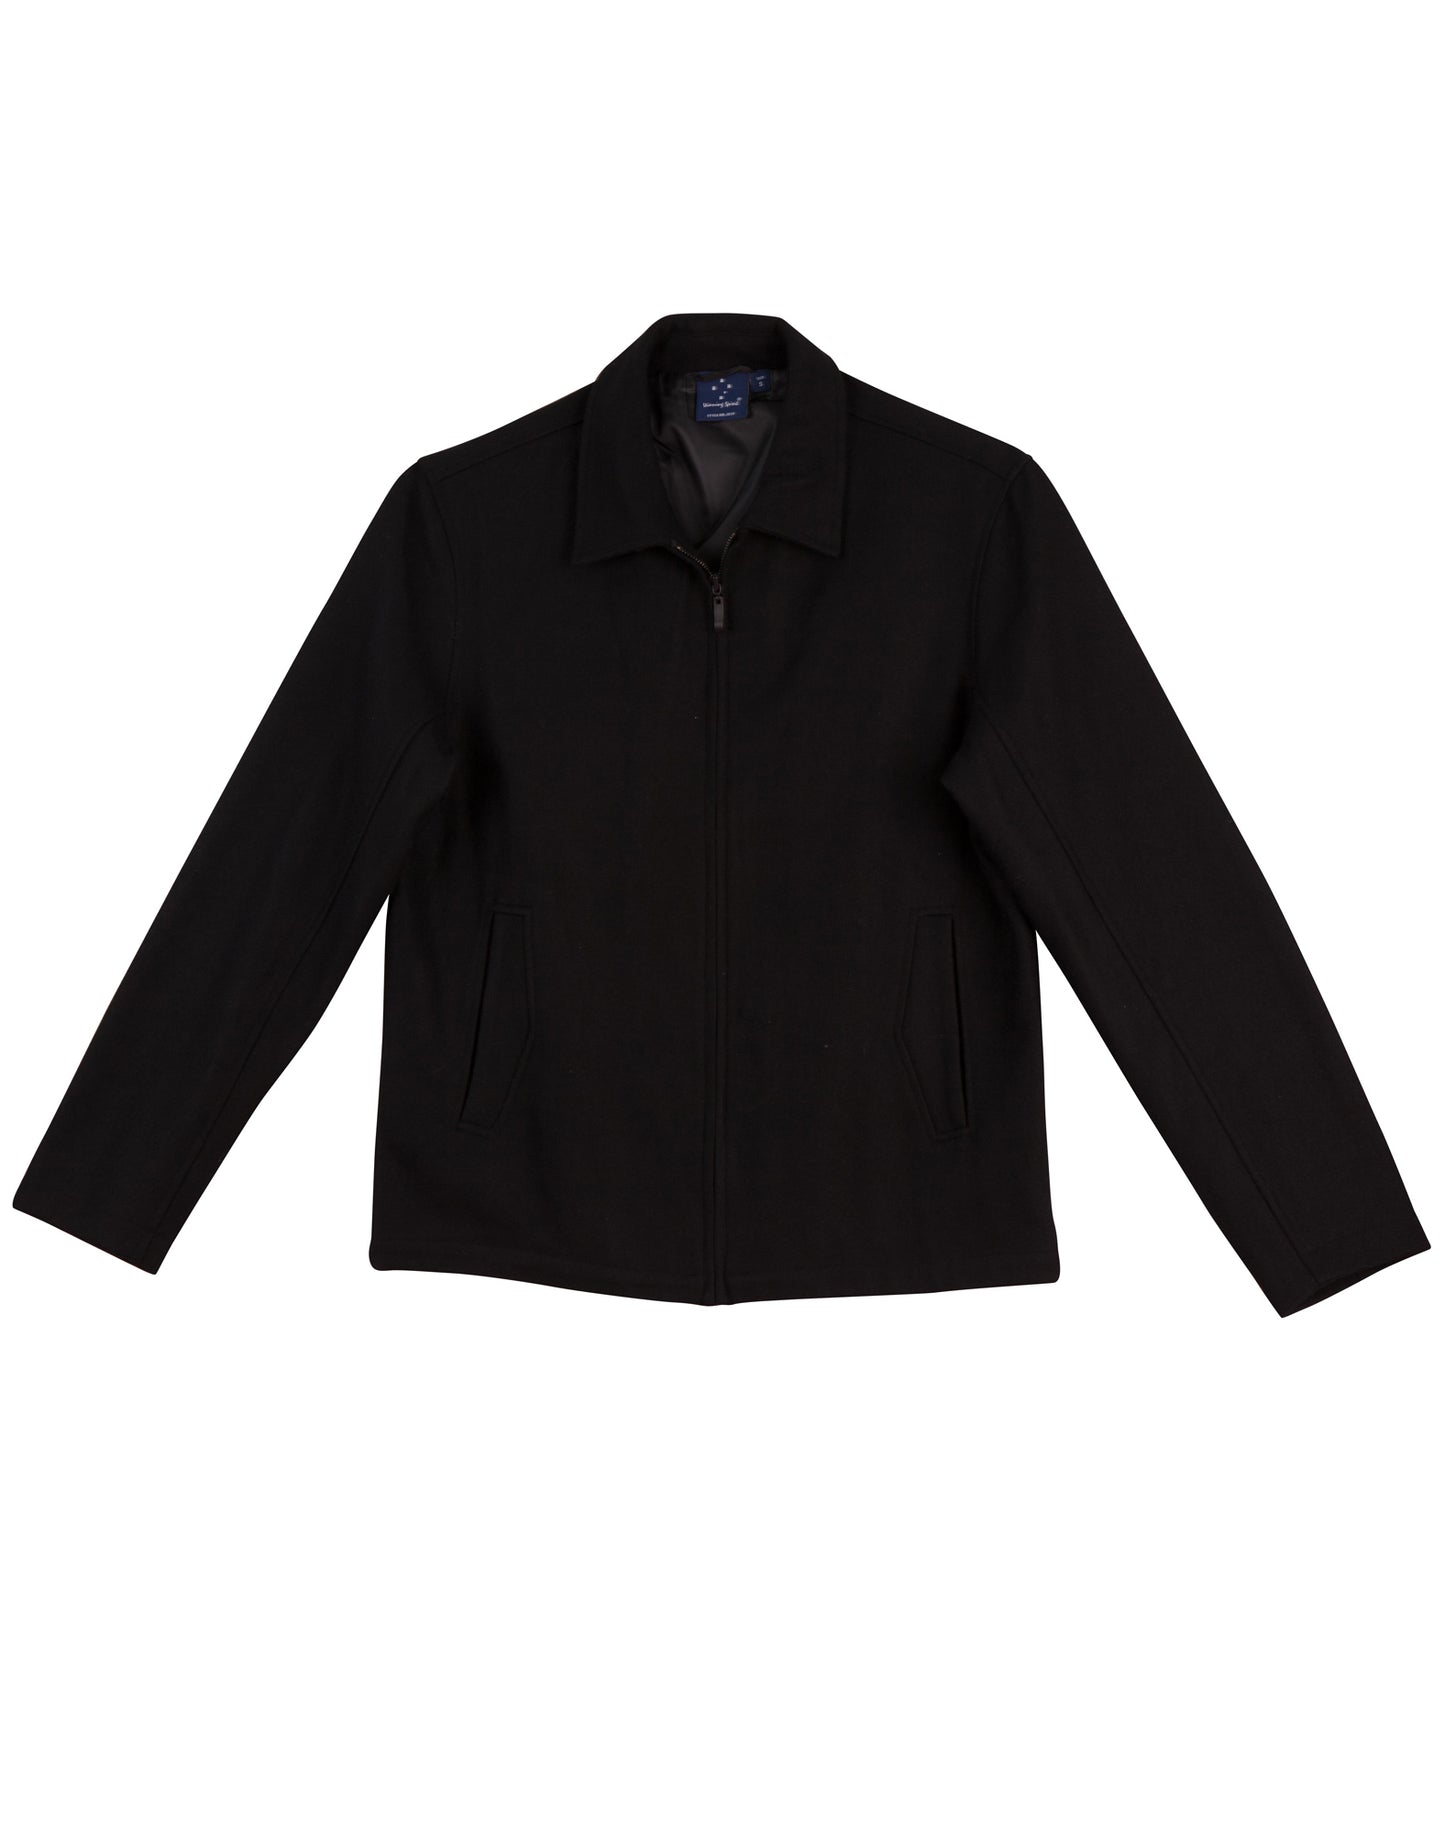 Winning Spirit-Flinders  Wool Blend Corporate Jacket Men's-JK13